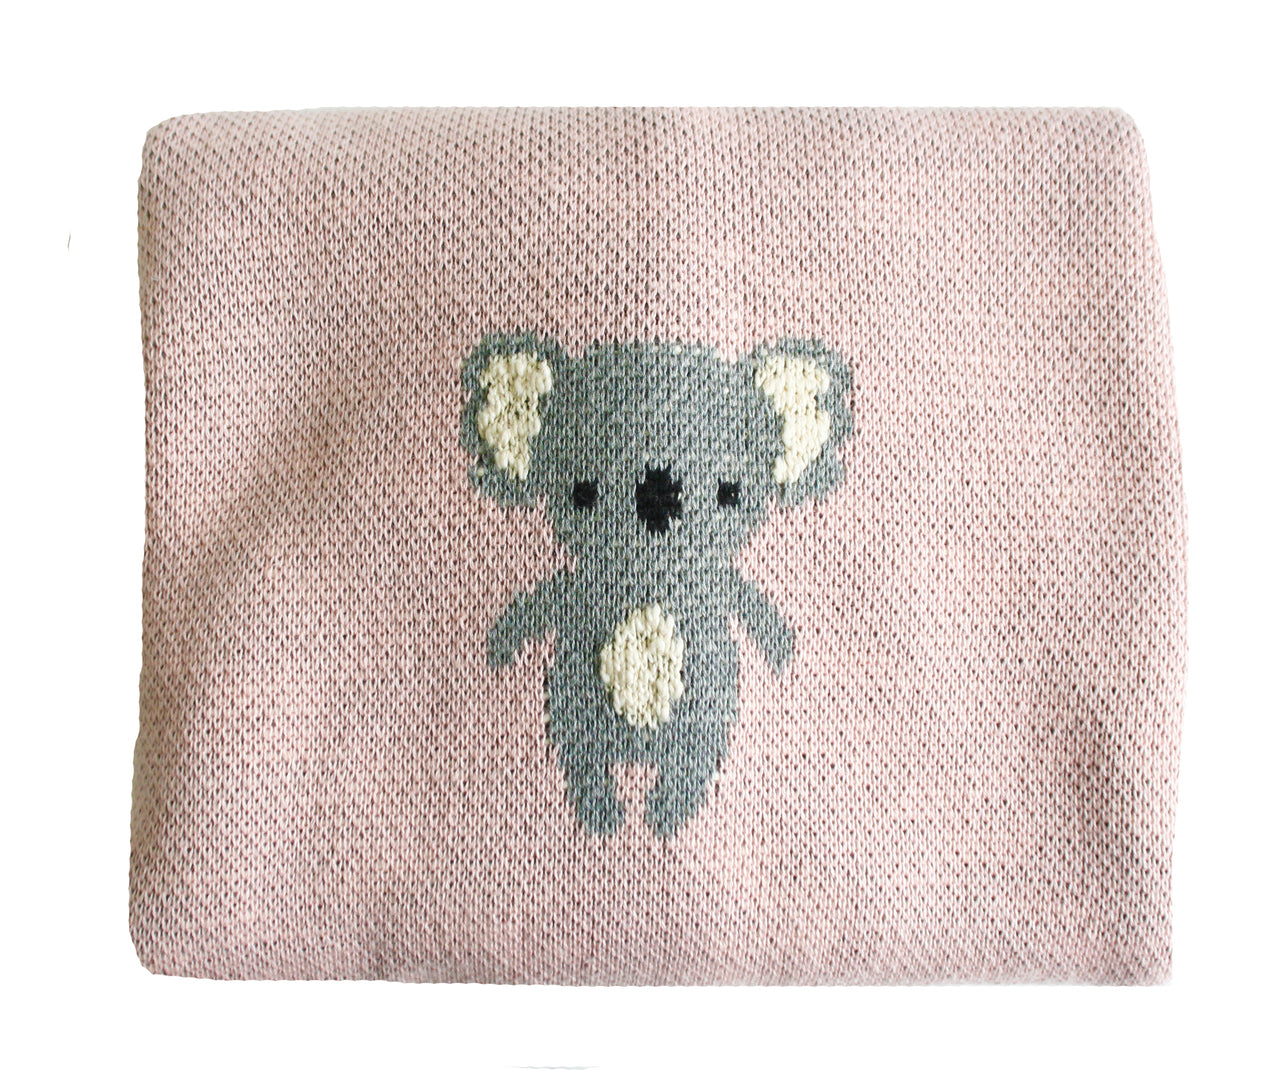 Koala Organic Cotton Baby Blanket - Pink